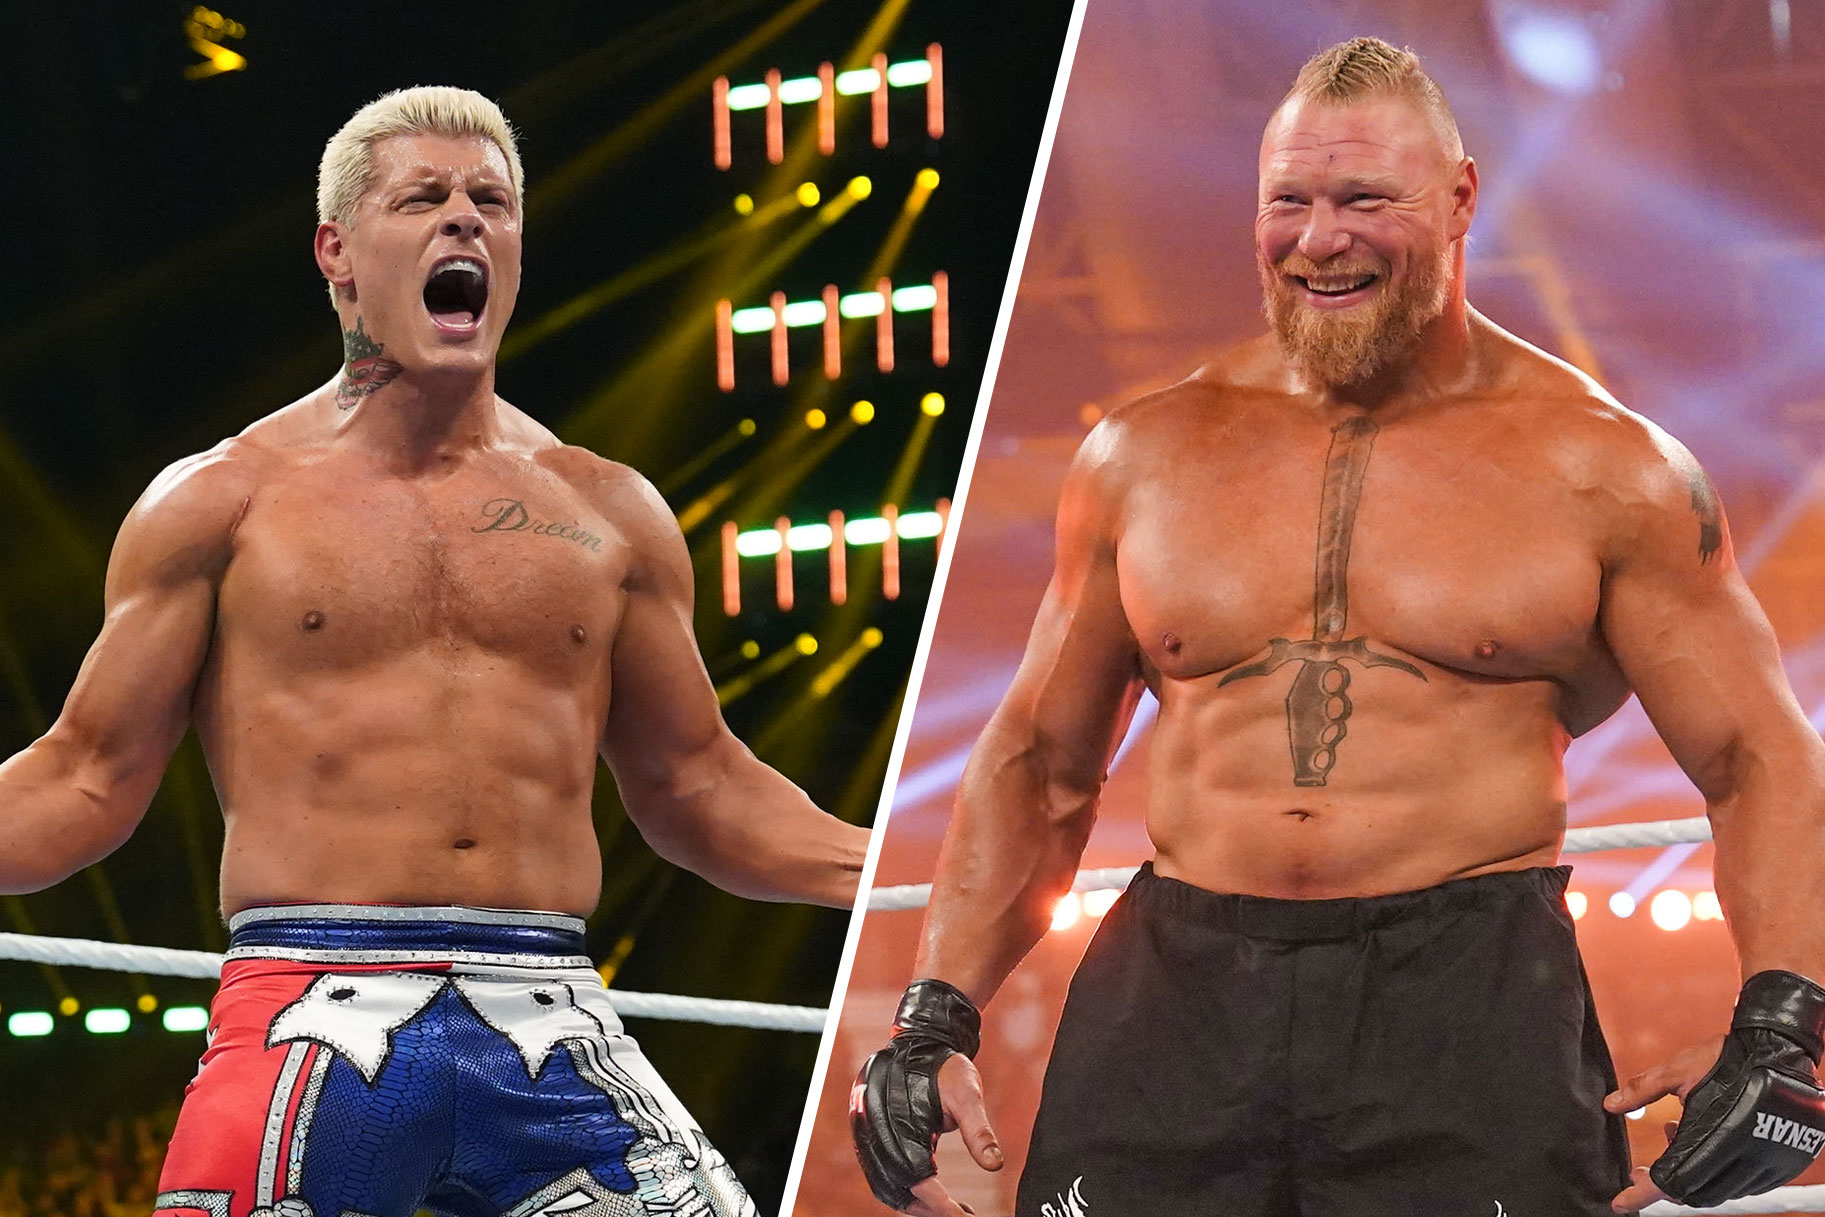 Split image of Cody Rhodes and Brock Lesnar